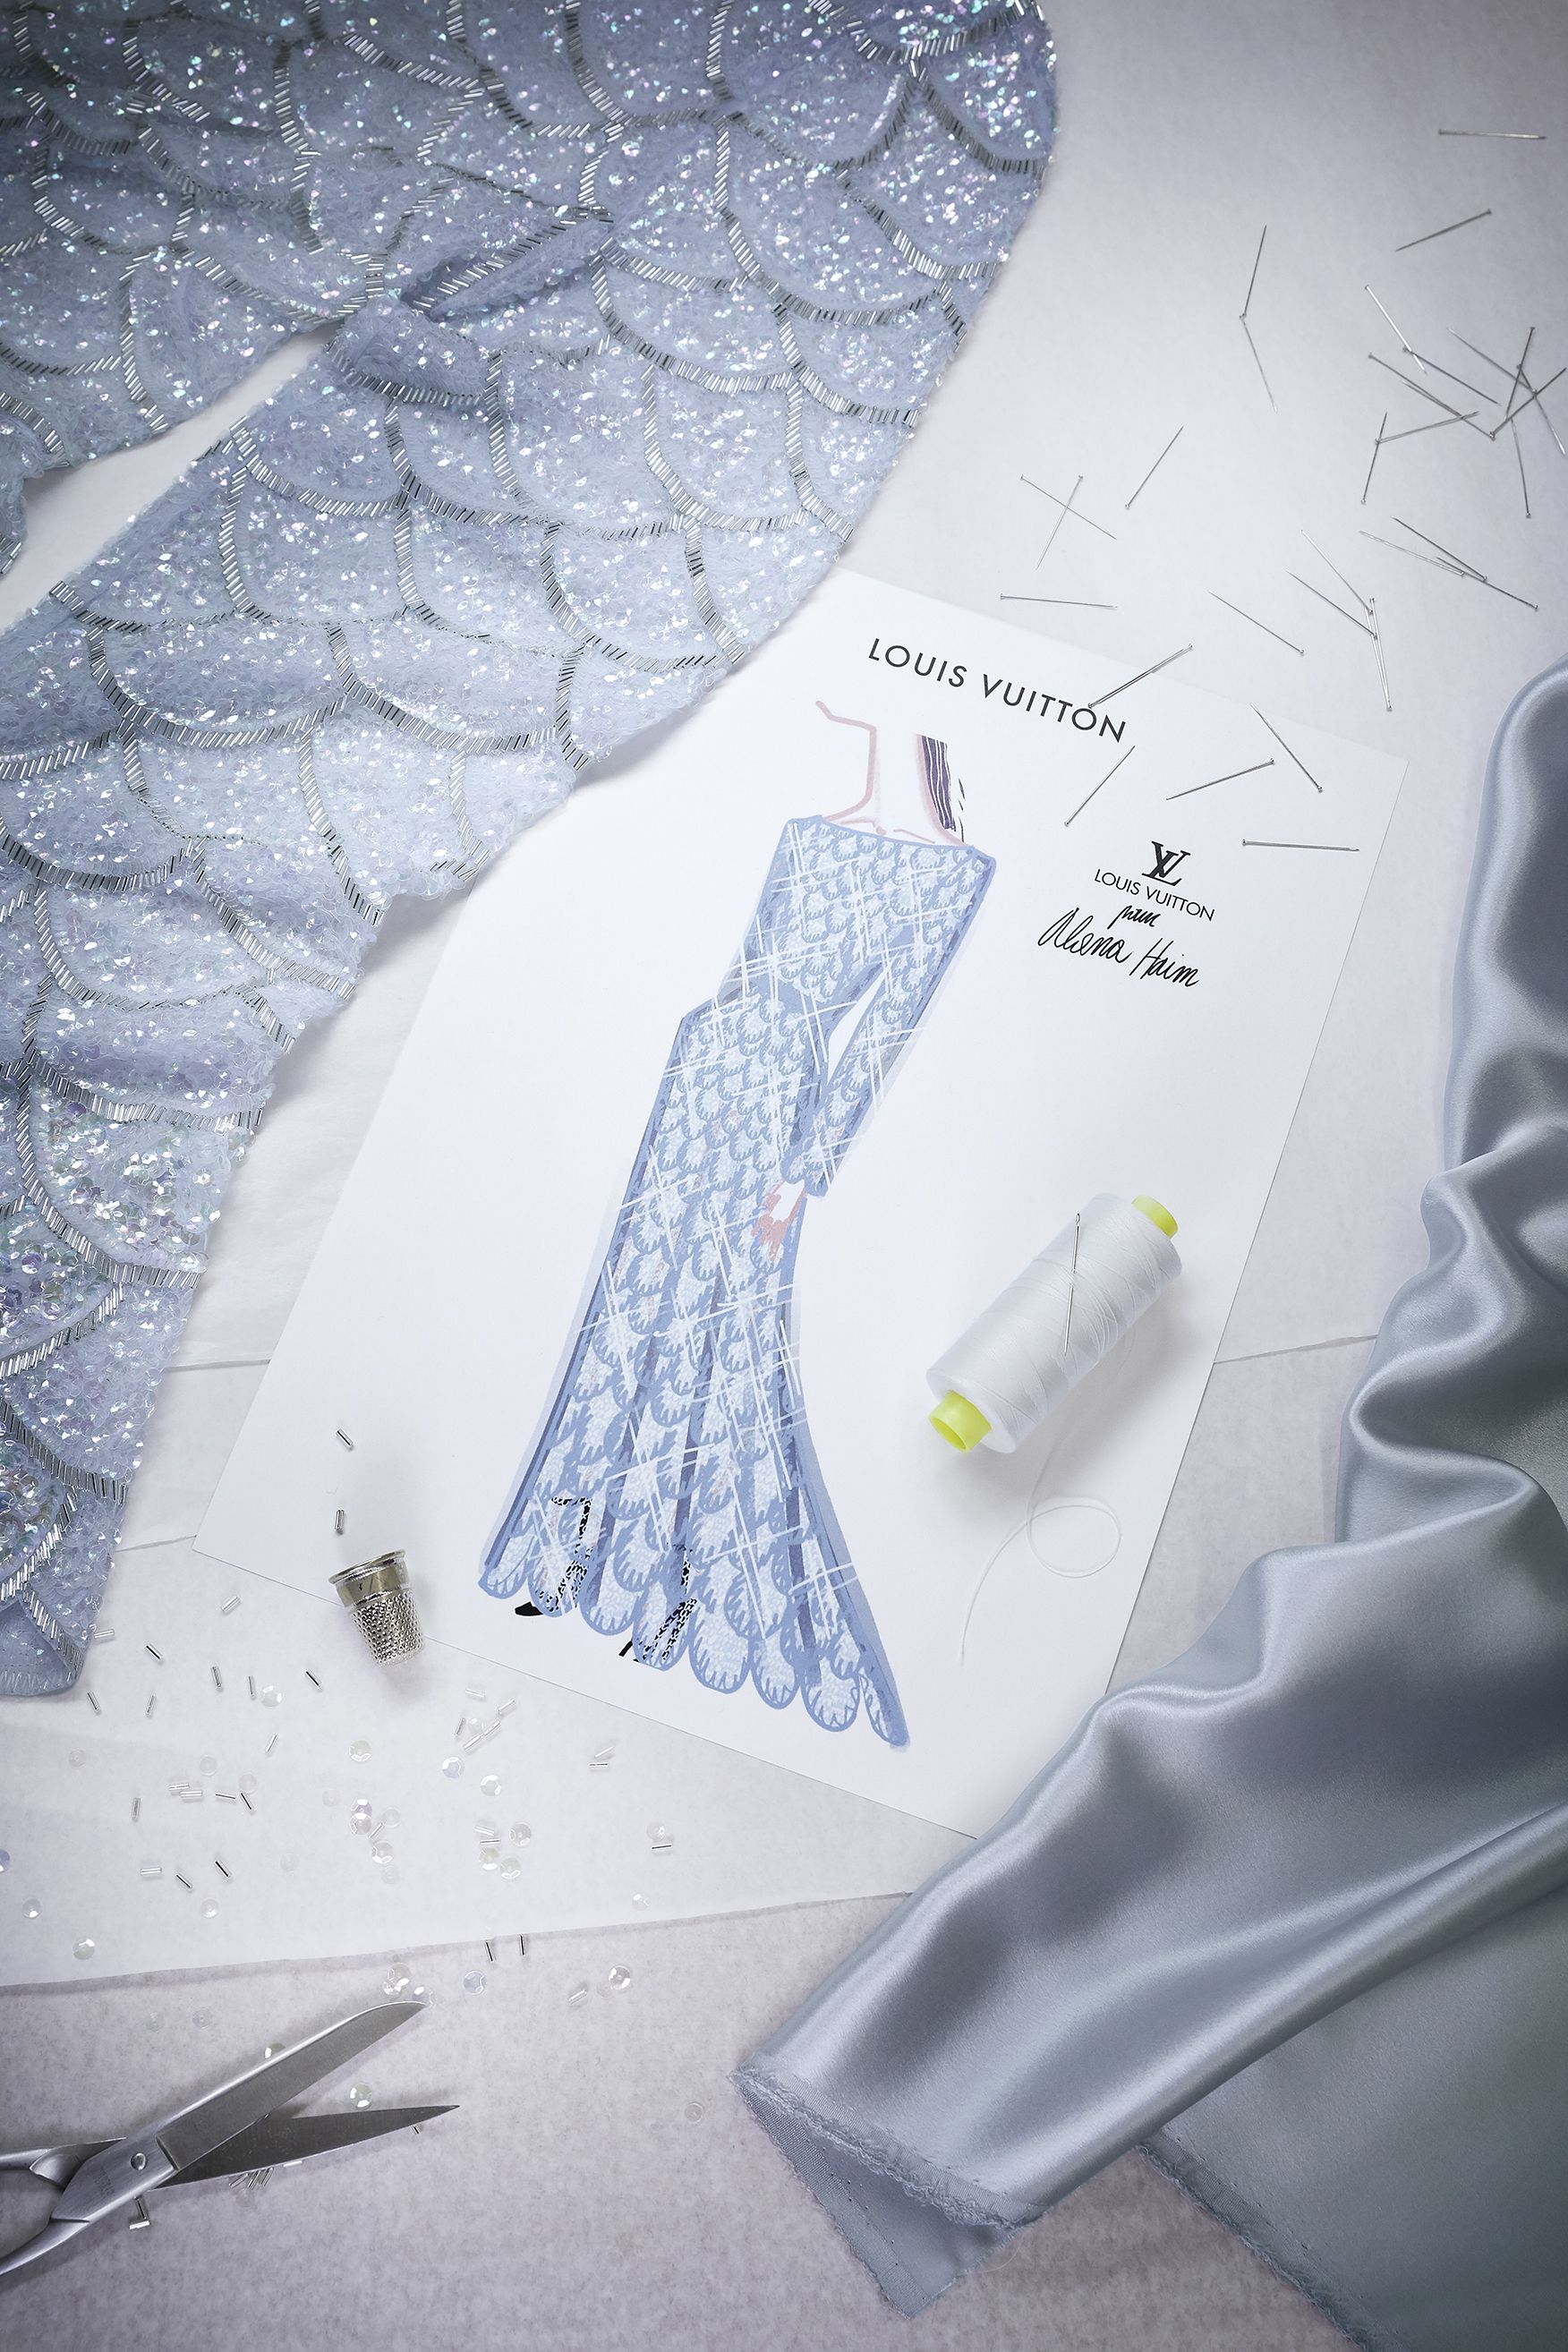 Louis Vuitton Scales Dress worn by Alana Haim on Oscars 2022 Red-Carpet